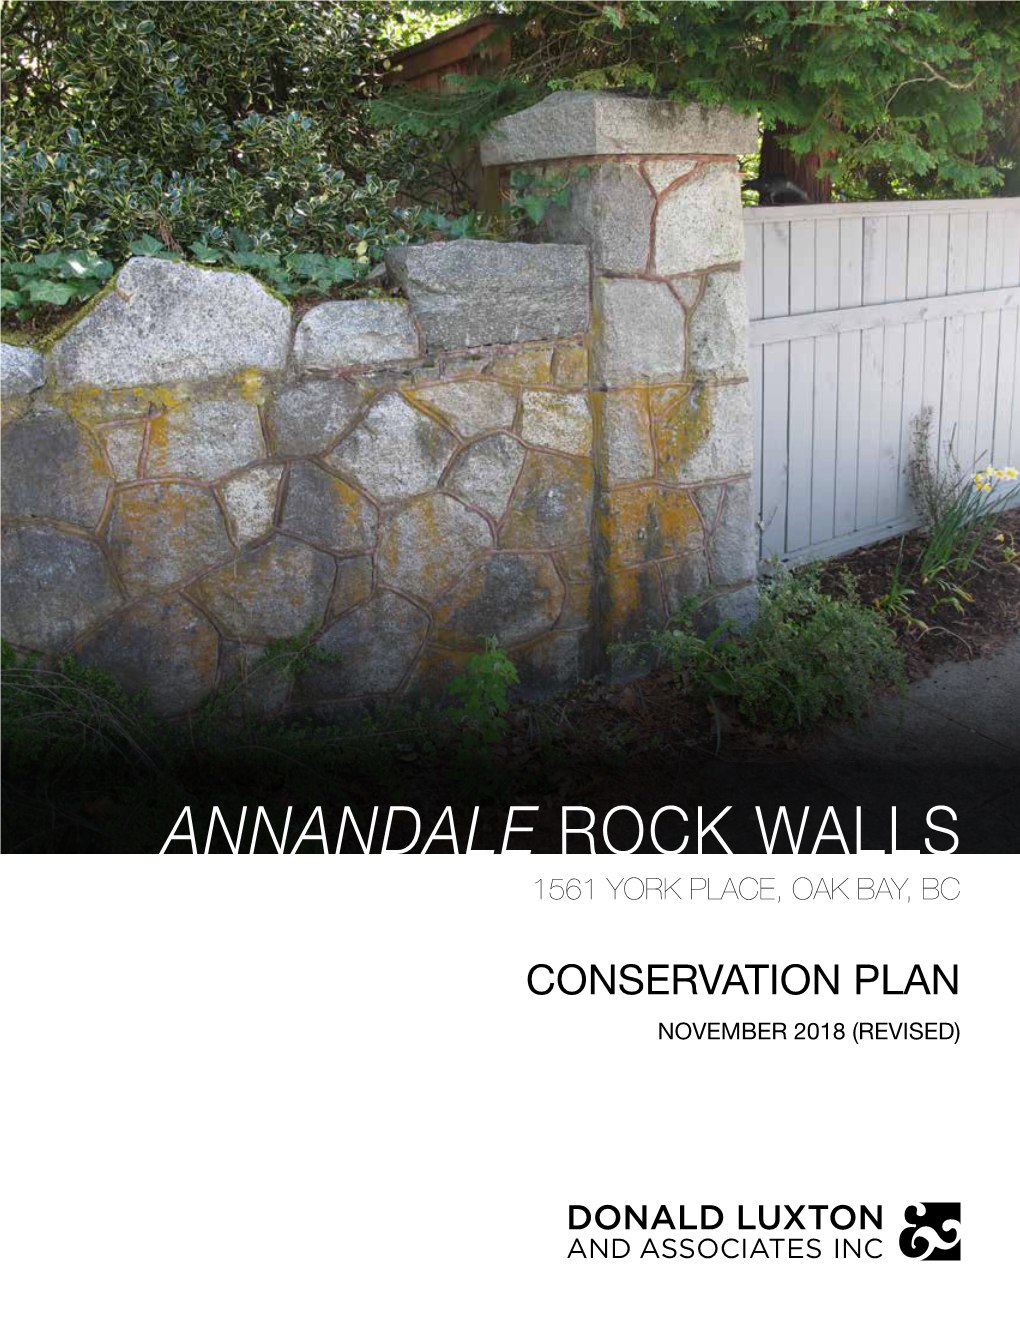 Annandale Rock Walls 1561 York Place, Oak Bay, Bc